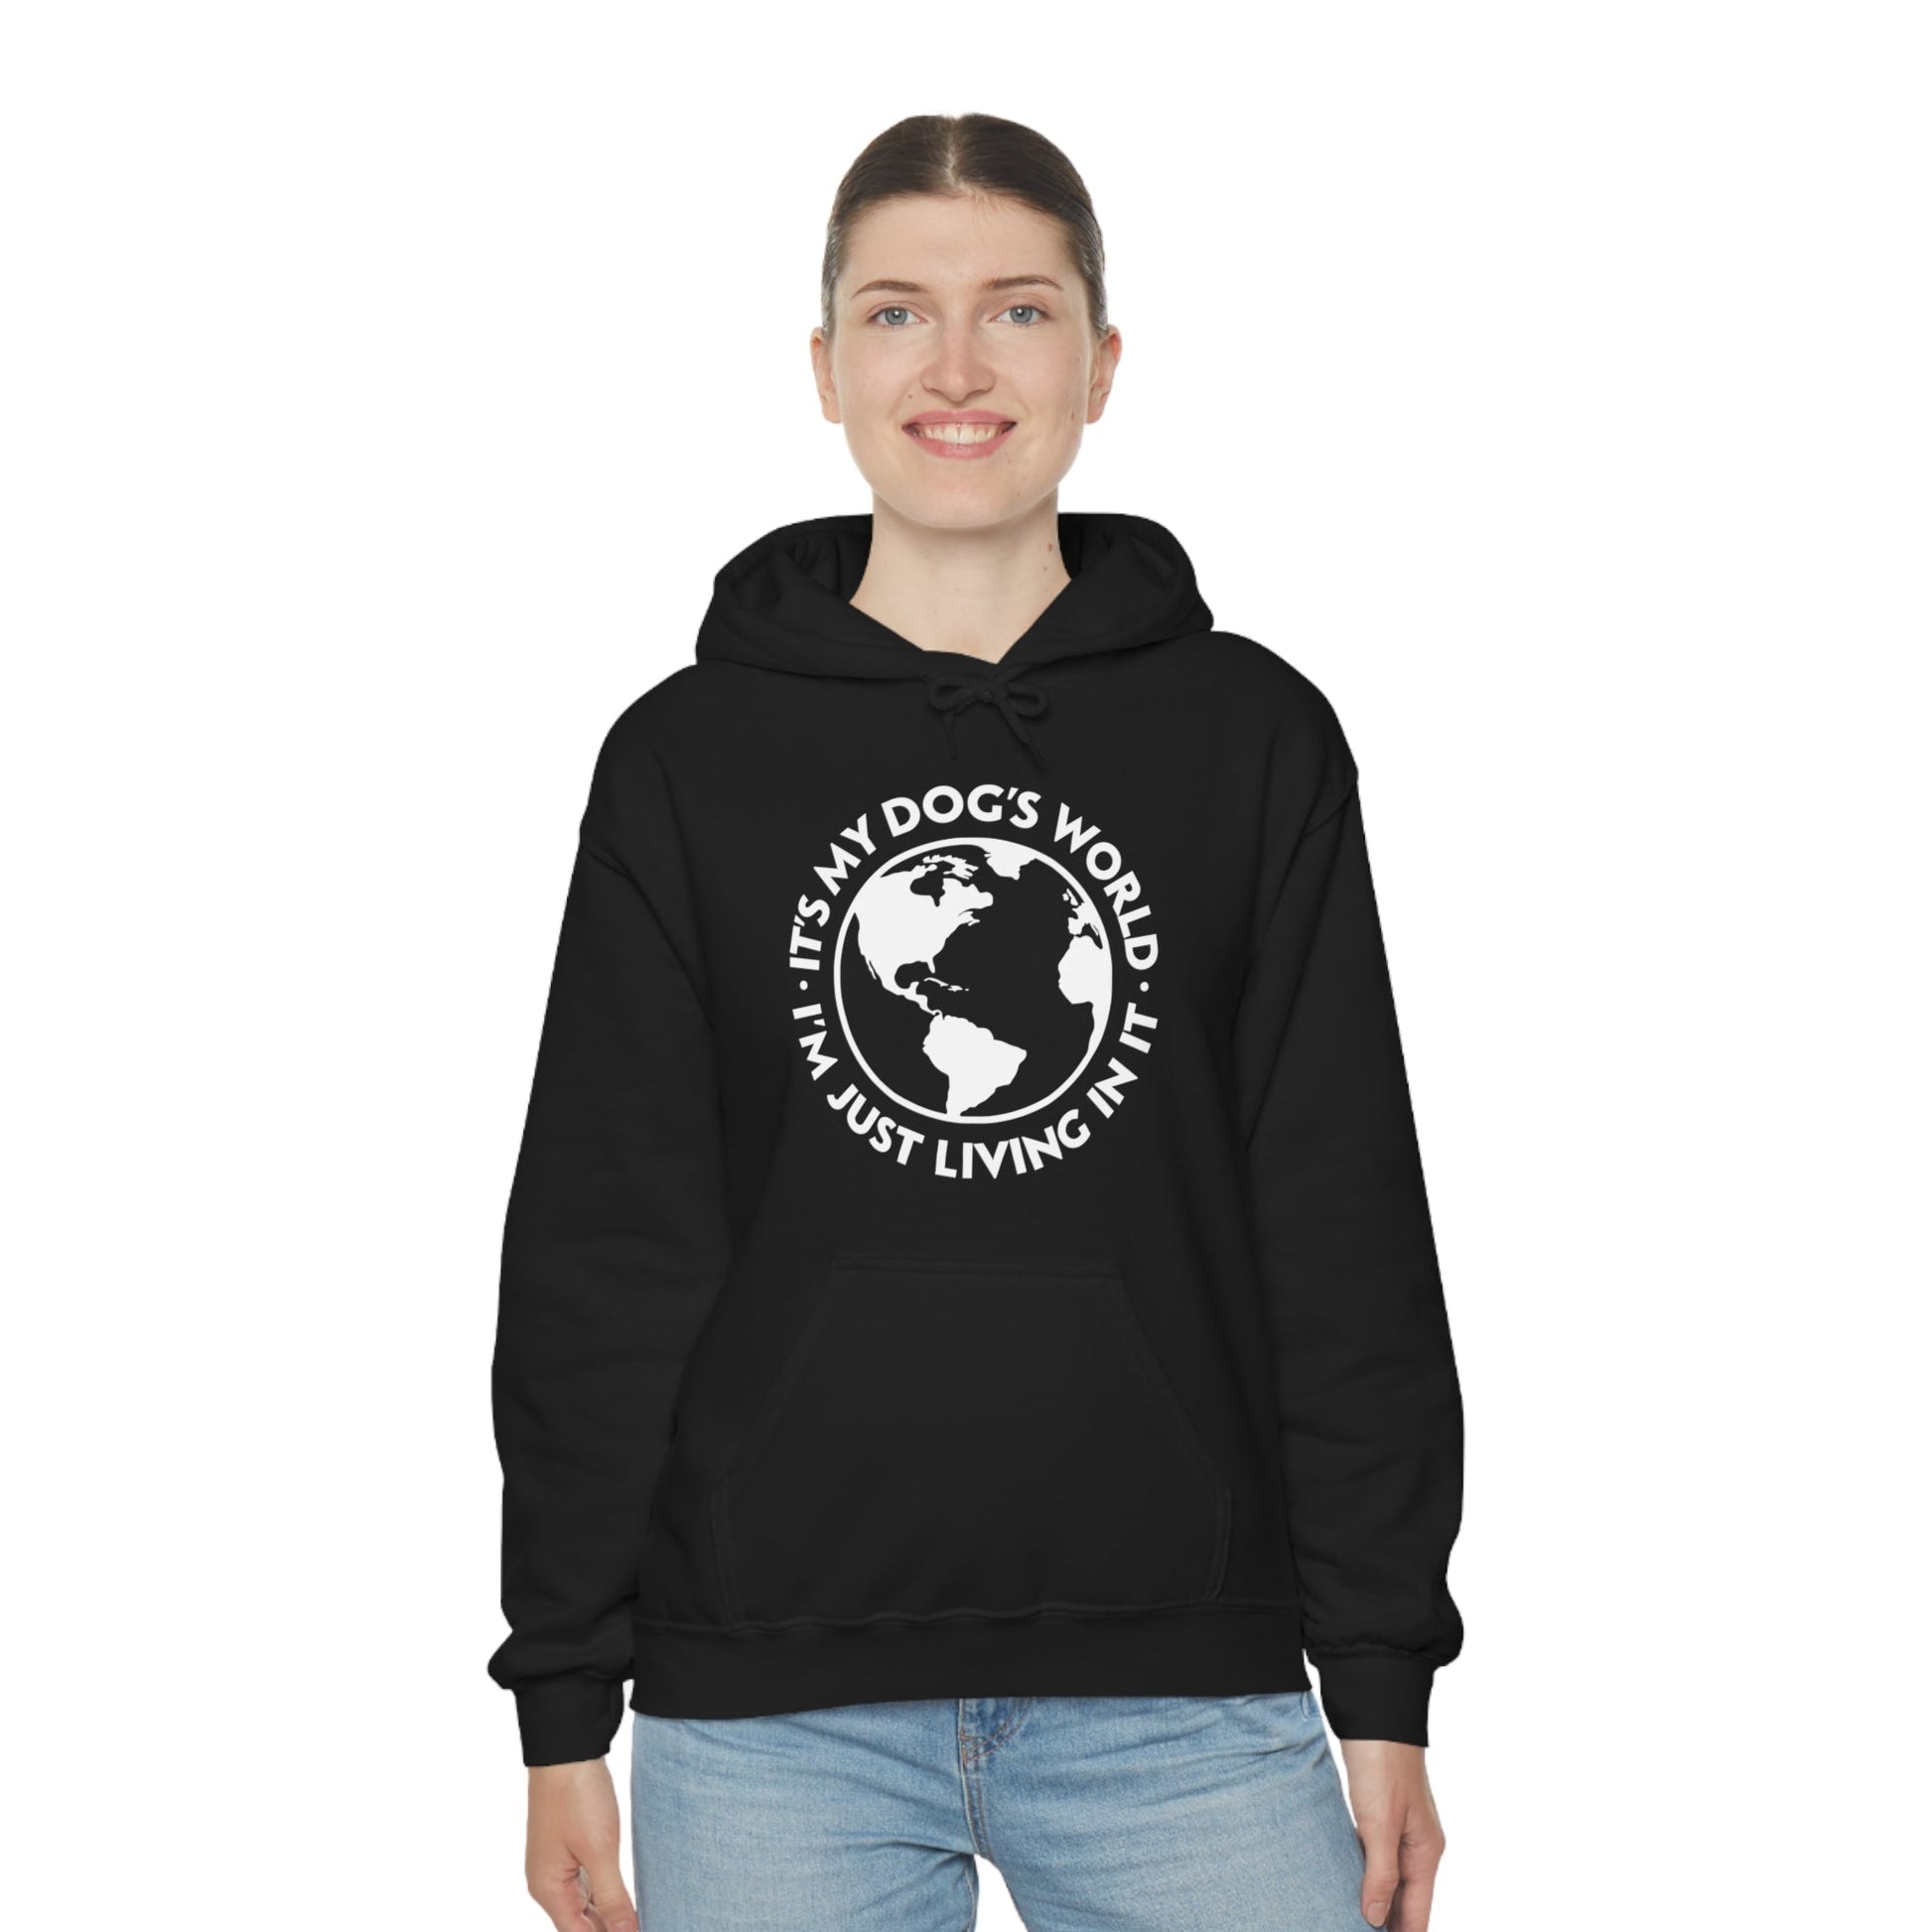 It's My Dog's World | Hooded Sweatshirt - Detezi Designs-33499509049670730637